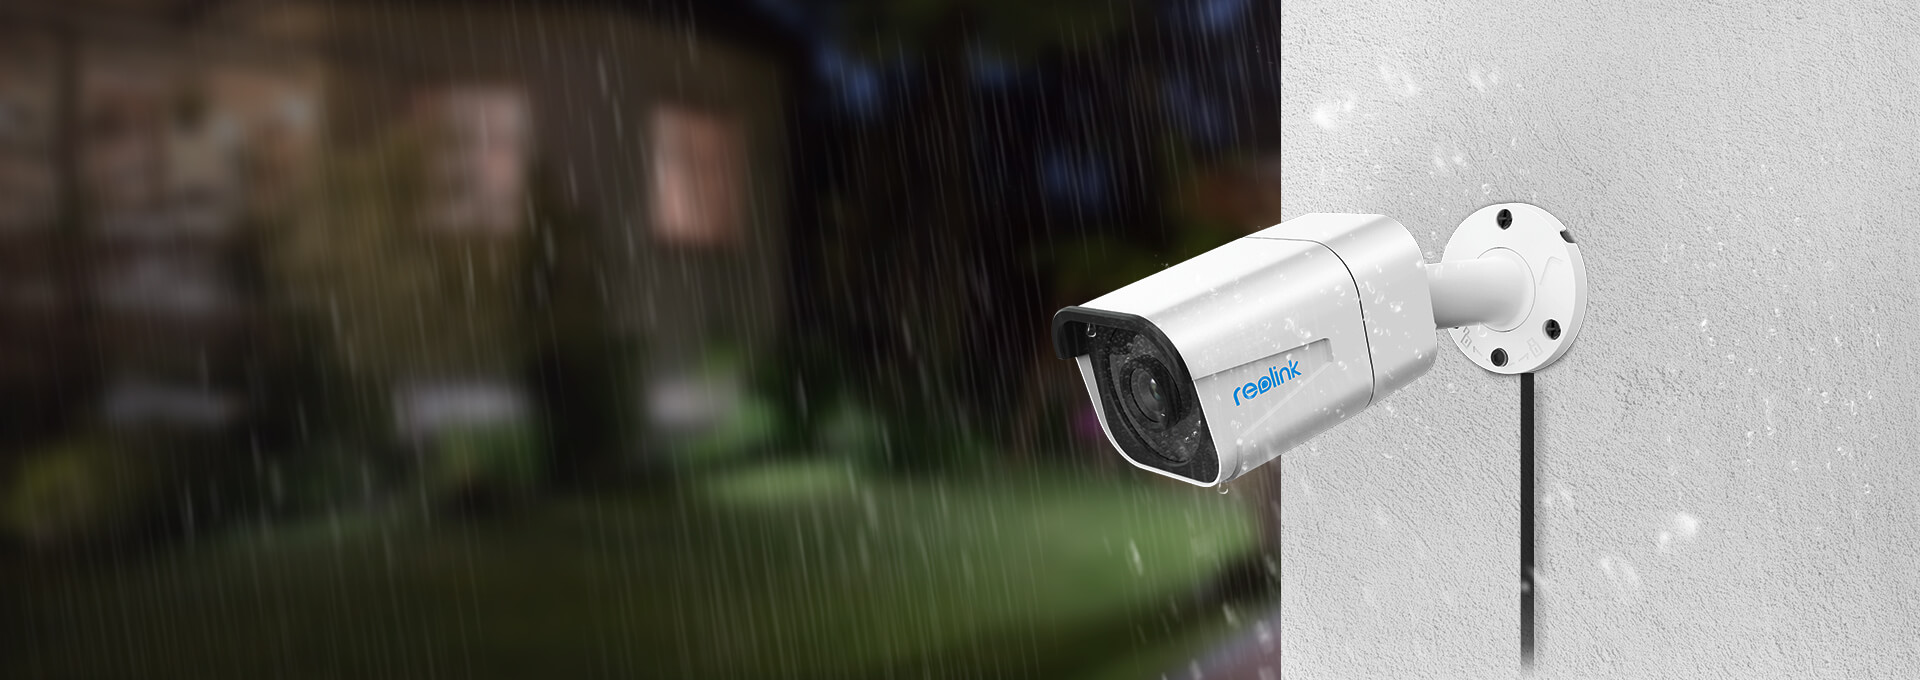  IP66 Weatherproof RLK8-800B4 4K Security Camera System 